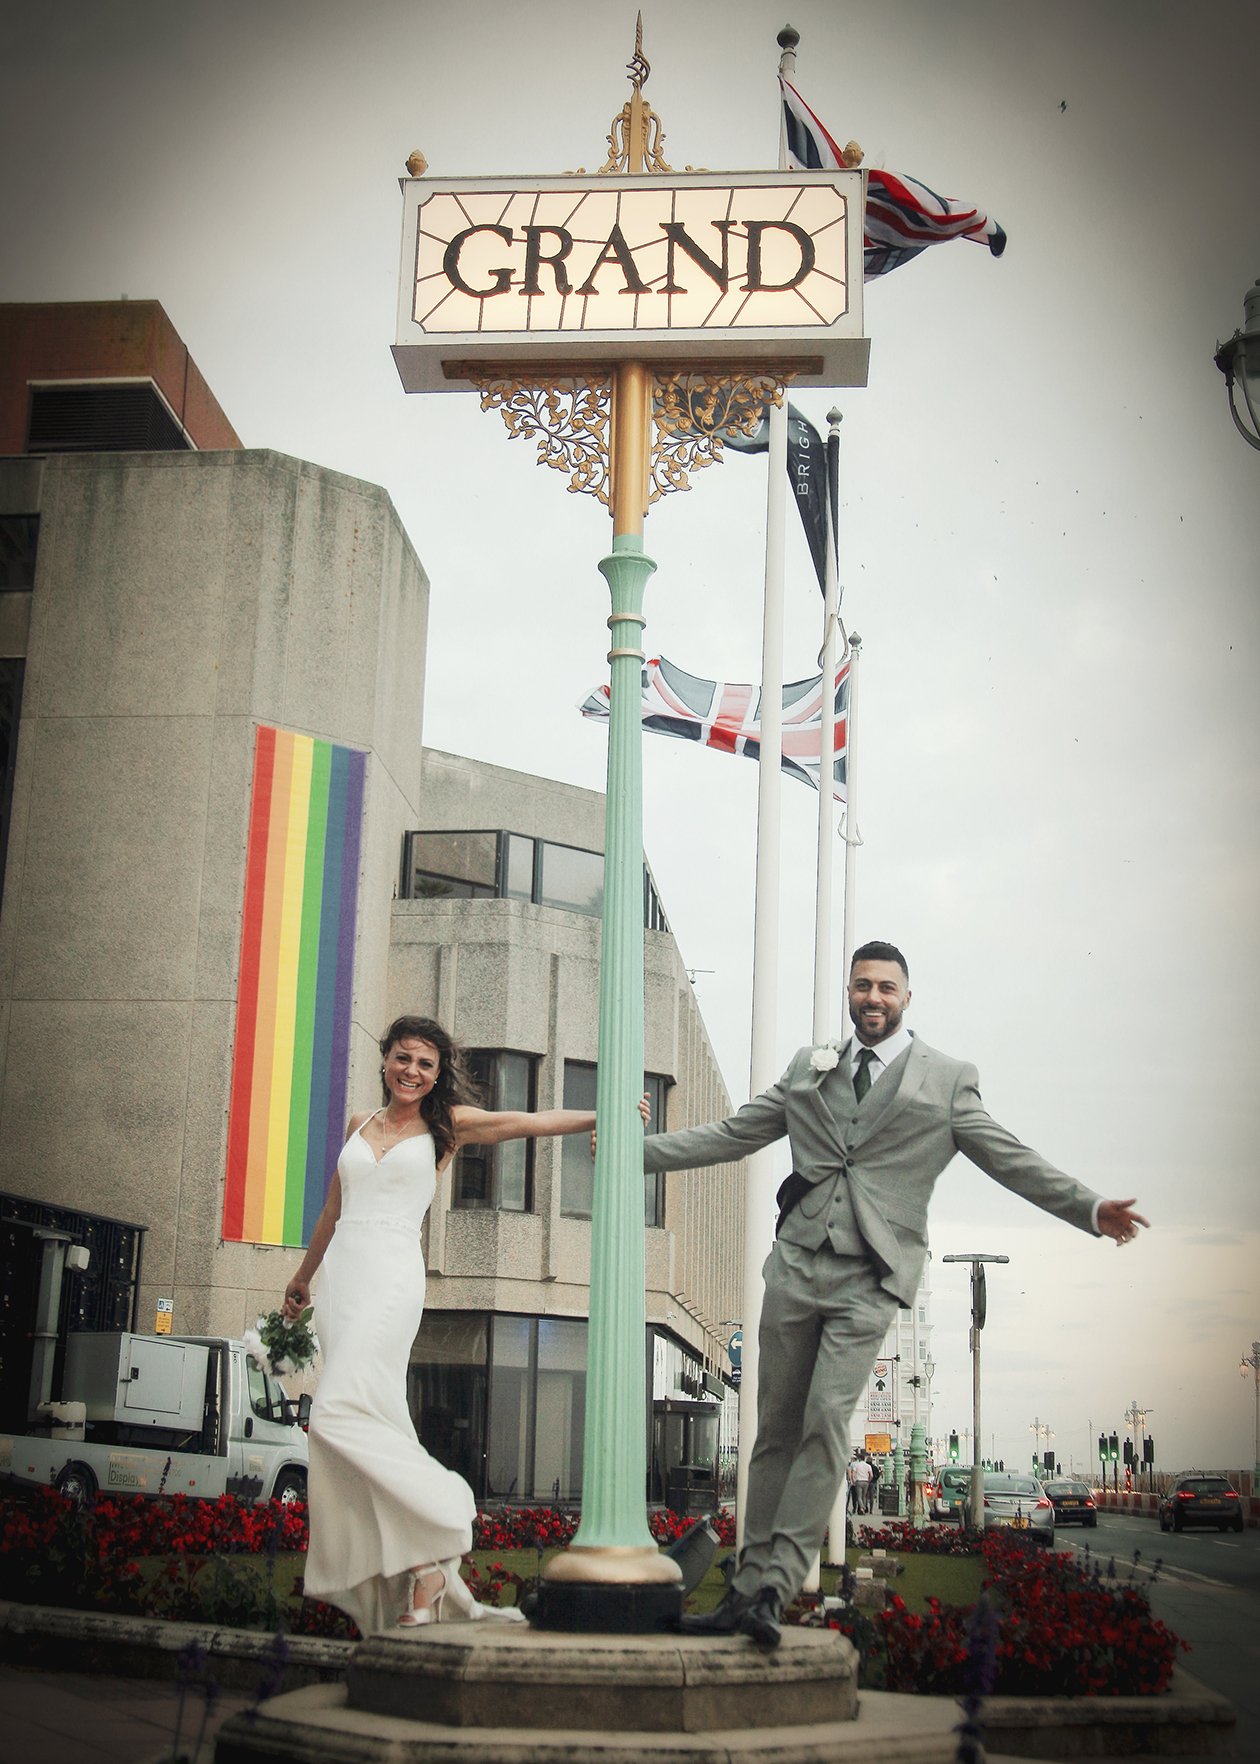 grand hotel brighton - west sussex wedding photography (44).jpg